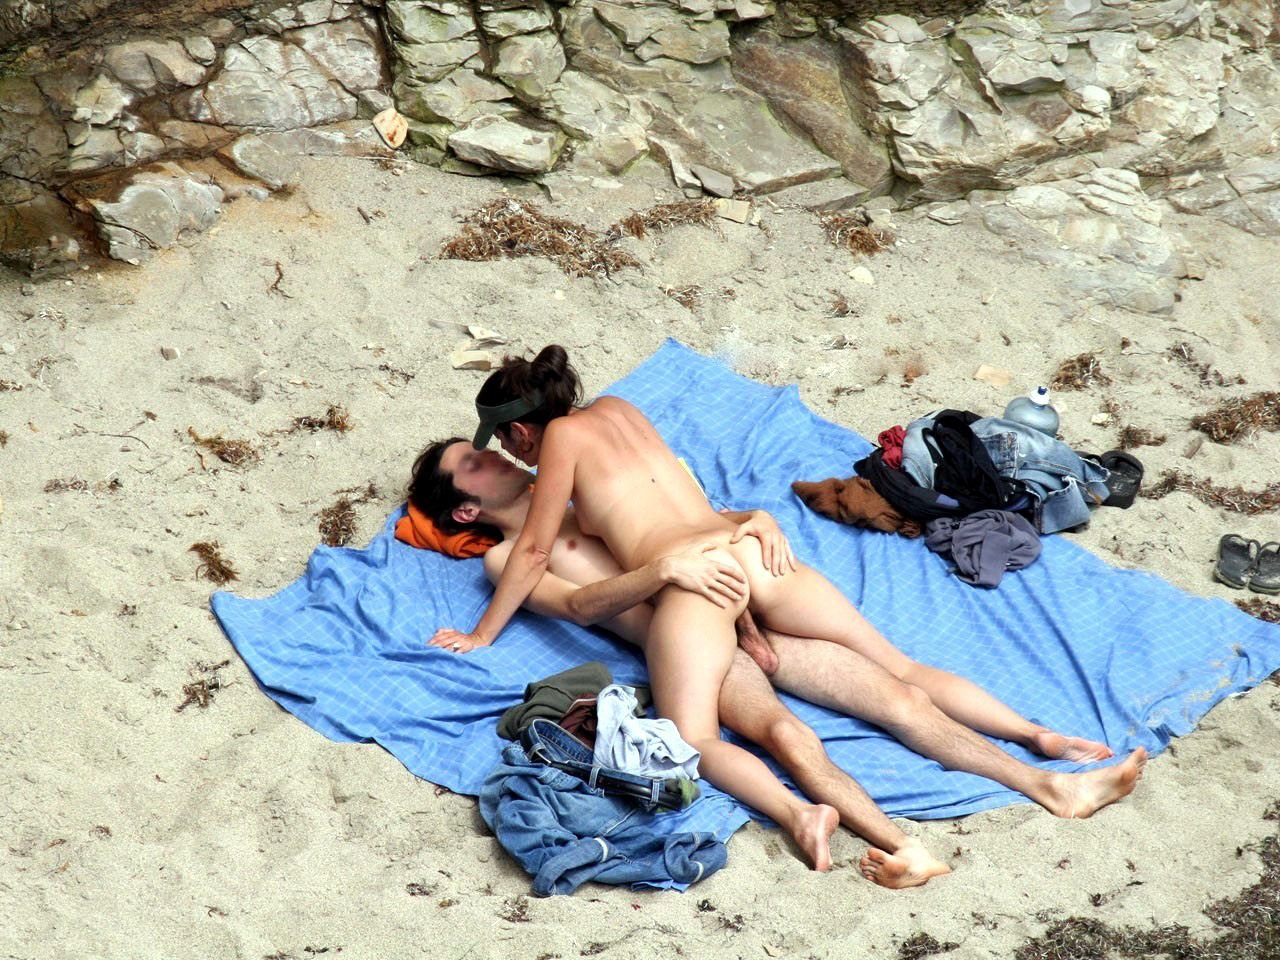 Hidden camera on the nudist beach photo pic